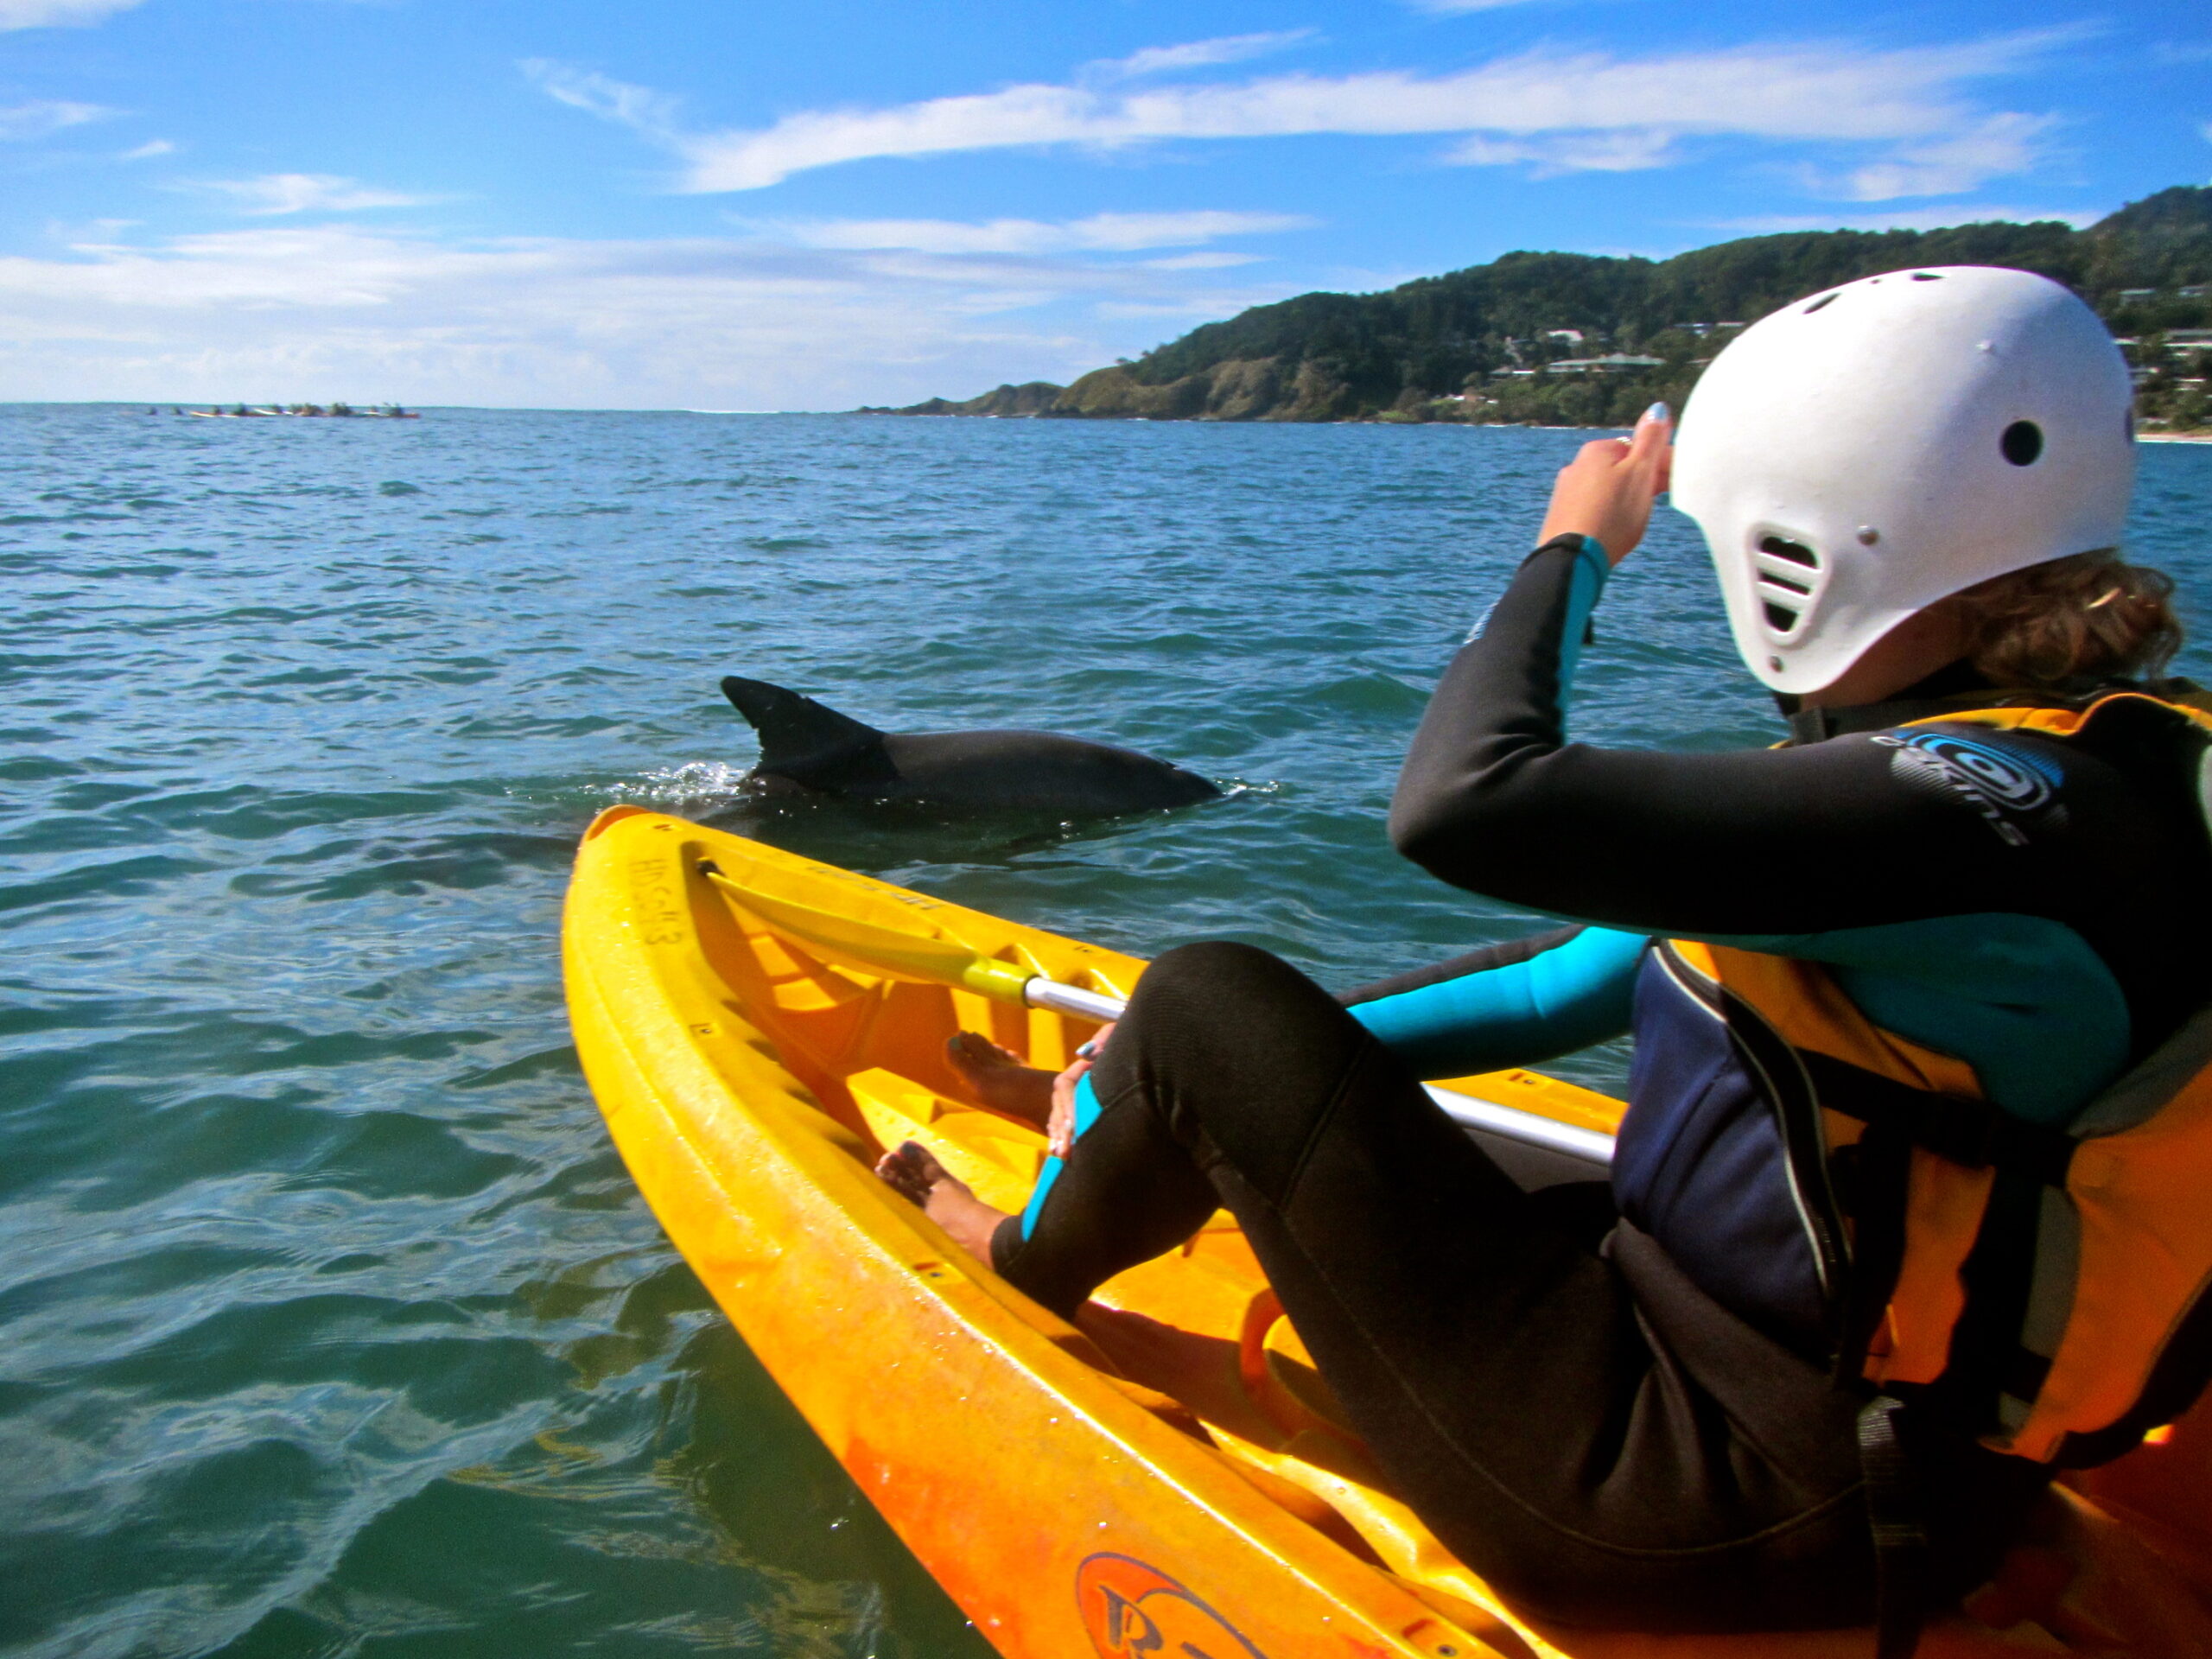 The Sunrise Byron Bay Sea Kayak Tour